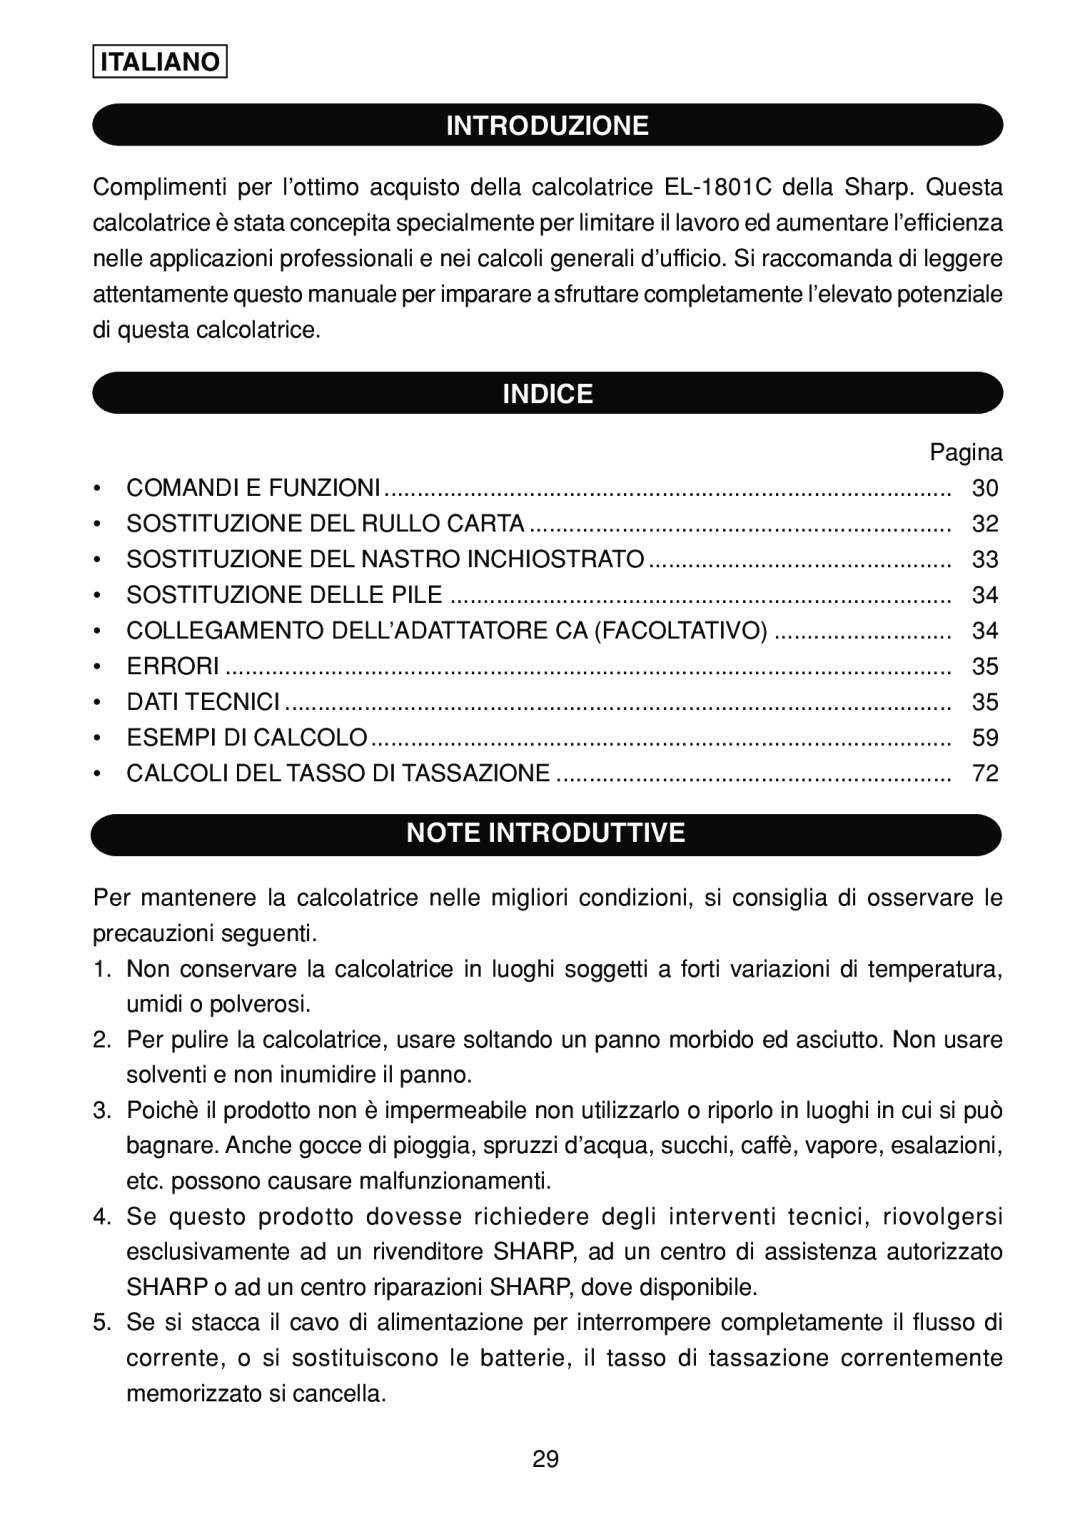 Sharp EL-1801C operation manual Introduzione, Indice, Note Introduttive, Italiano 